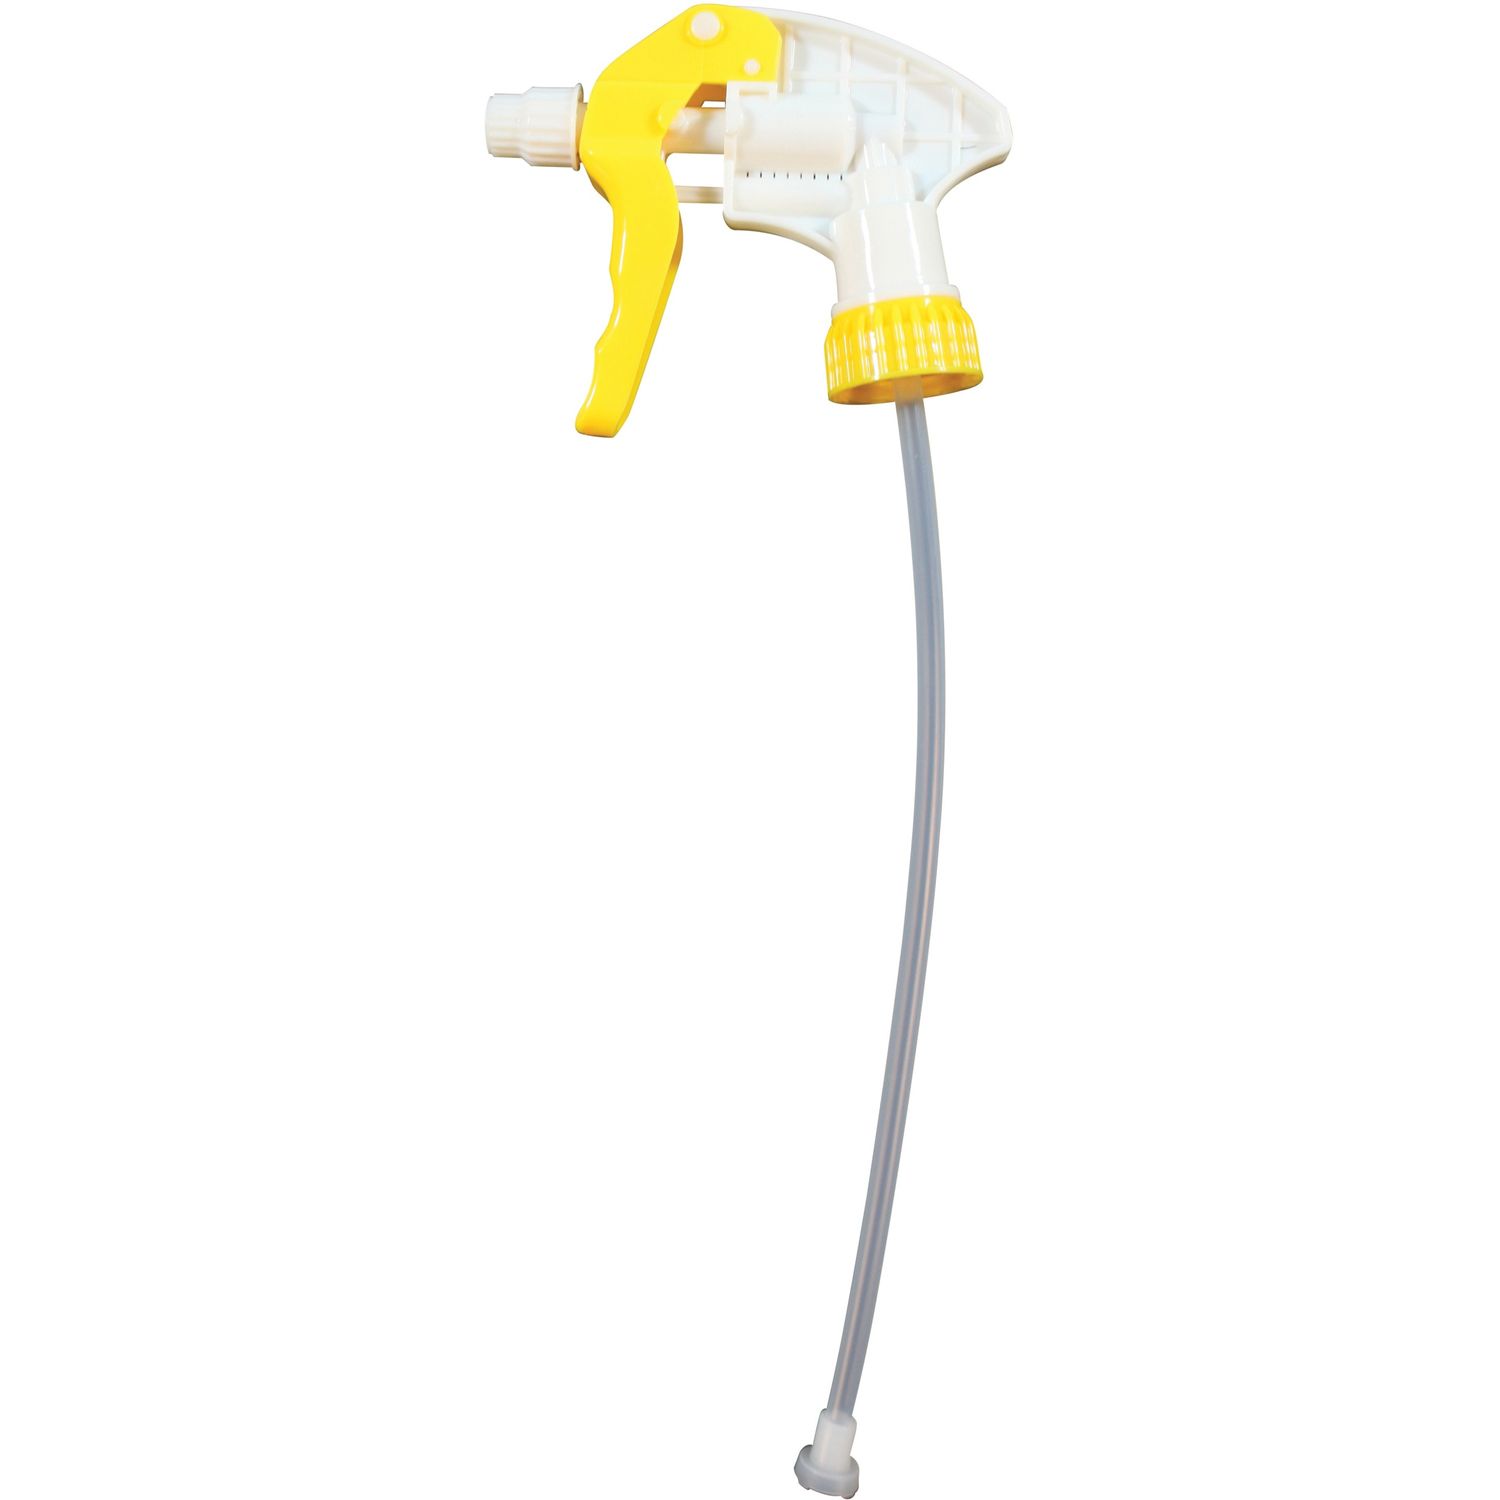 Chemical Resistant Trigger Sprayer Yellow, White, Polytetramethylene Terephthalate (PTMT)